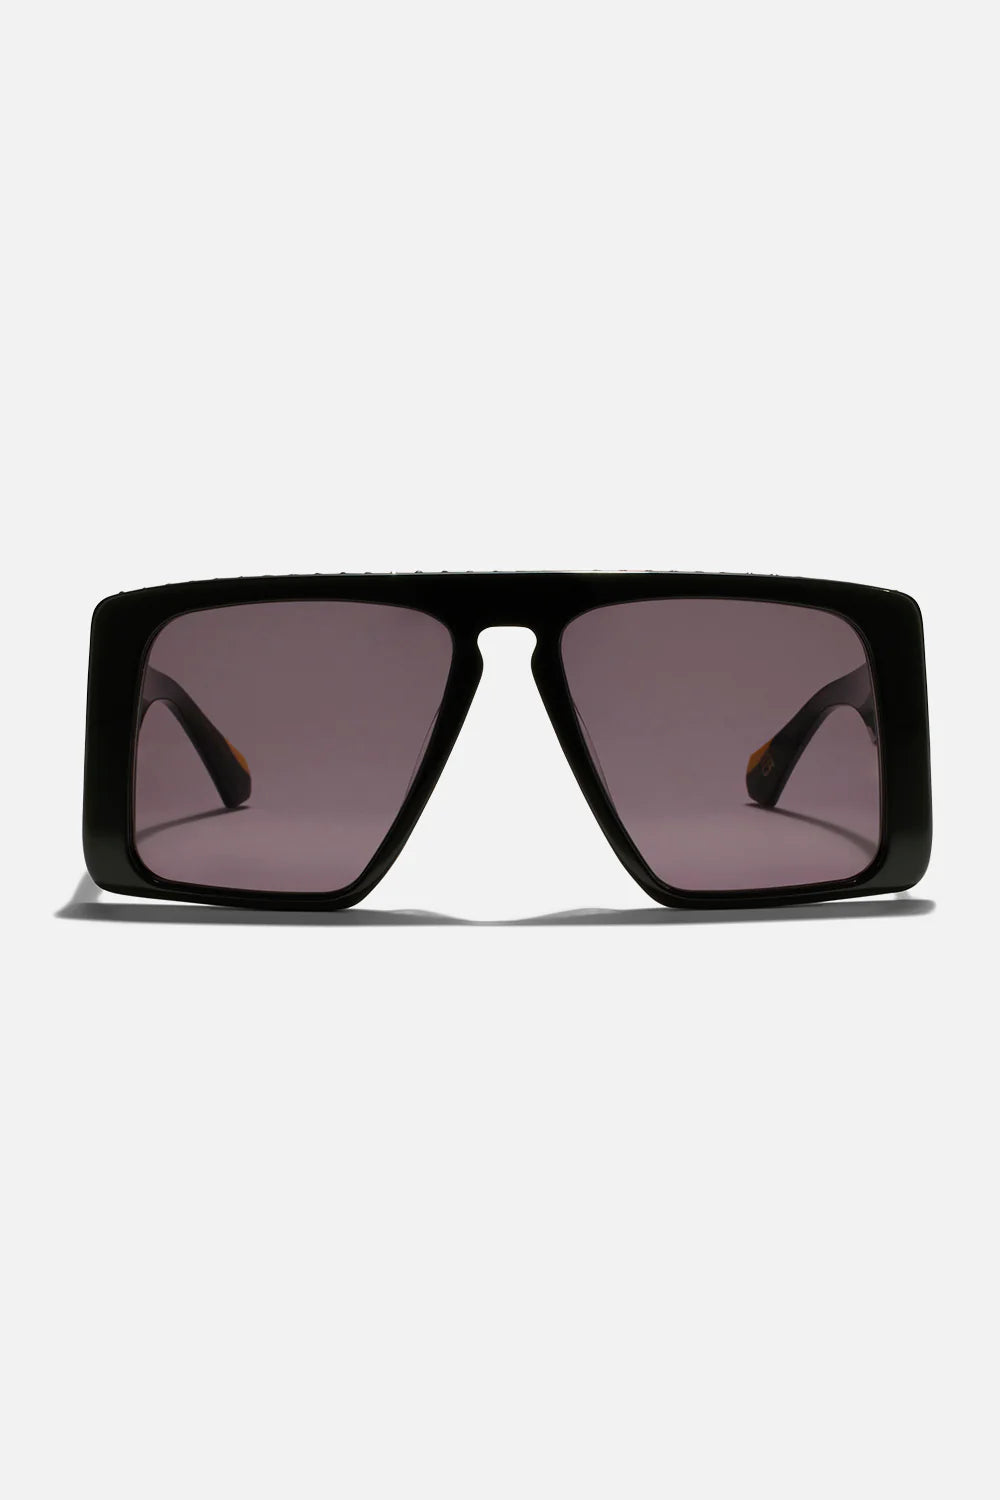 Camilla Fully Booked Sunglasses - Solid Black